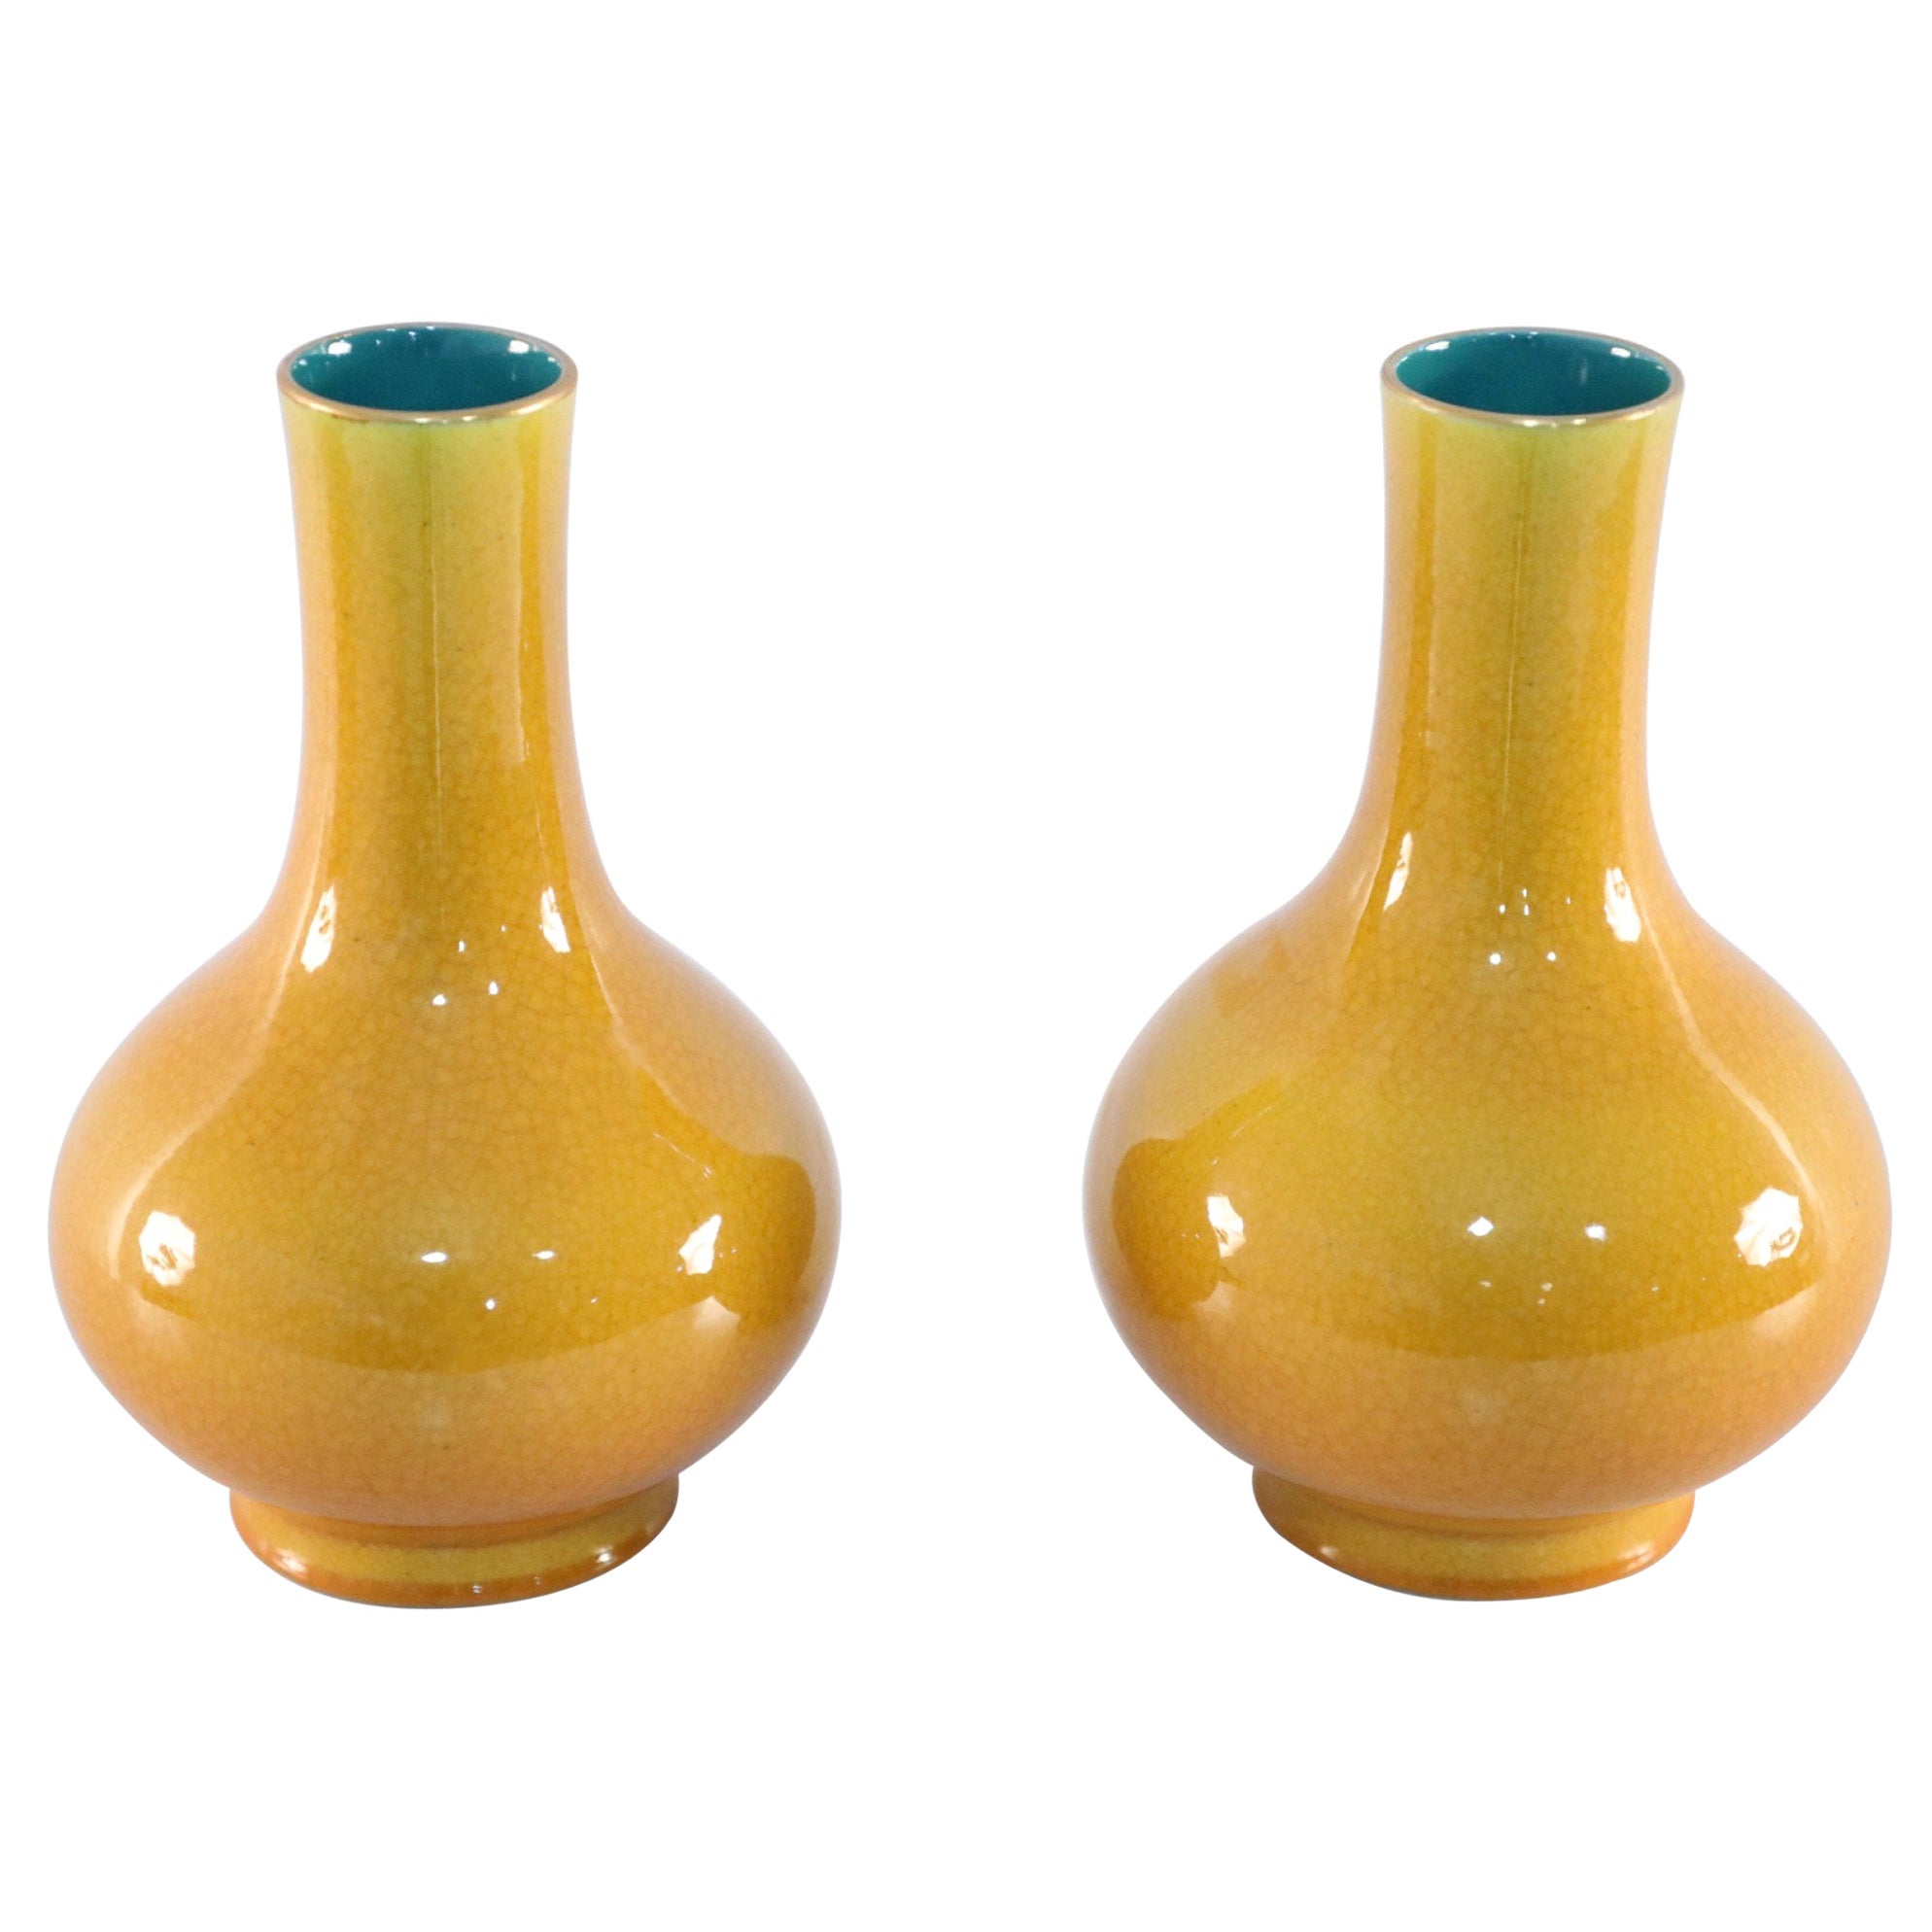 Pair of Yellow Pear Shaped Ceramic Vases